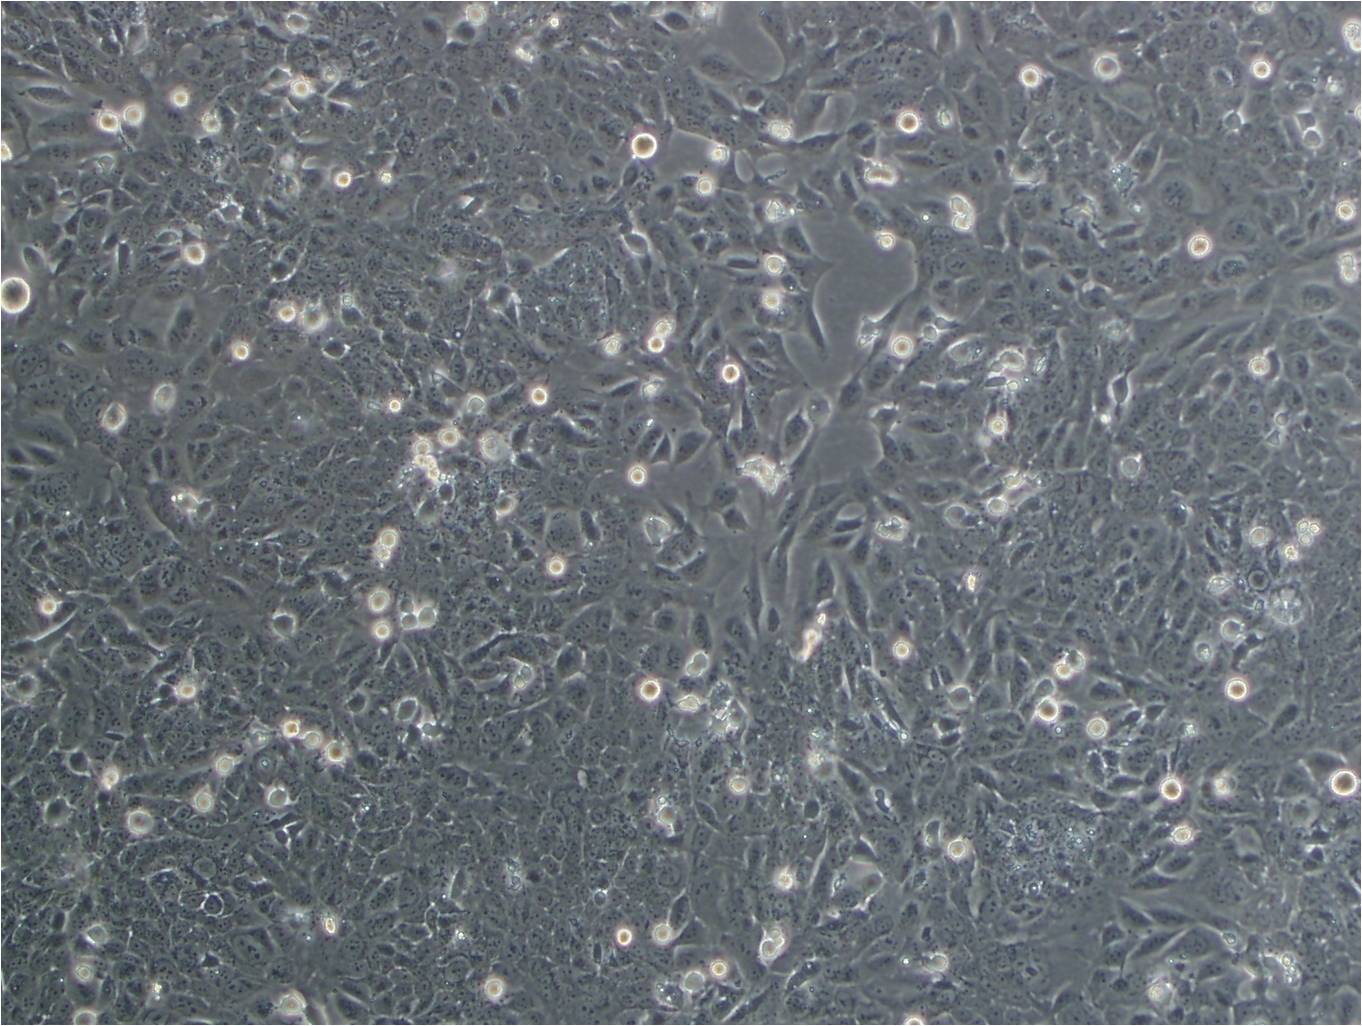 SK-N-MC epithelioid cells人神经上皮瘤细胞系,SK-N-MC epithelioid cells